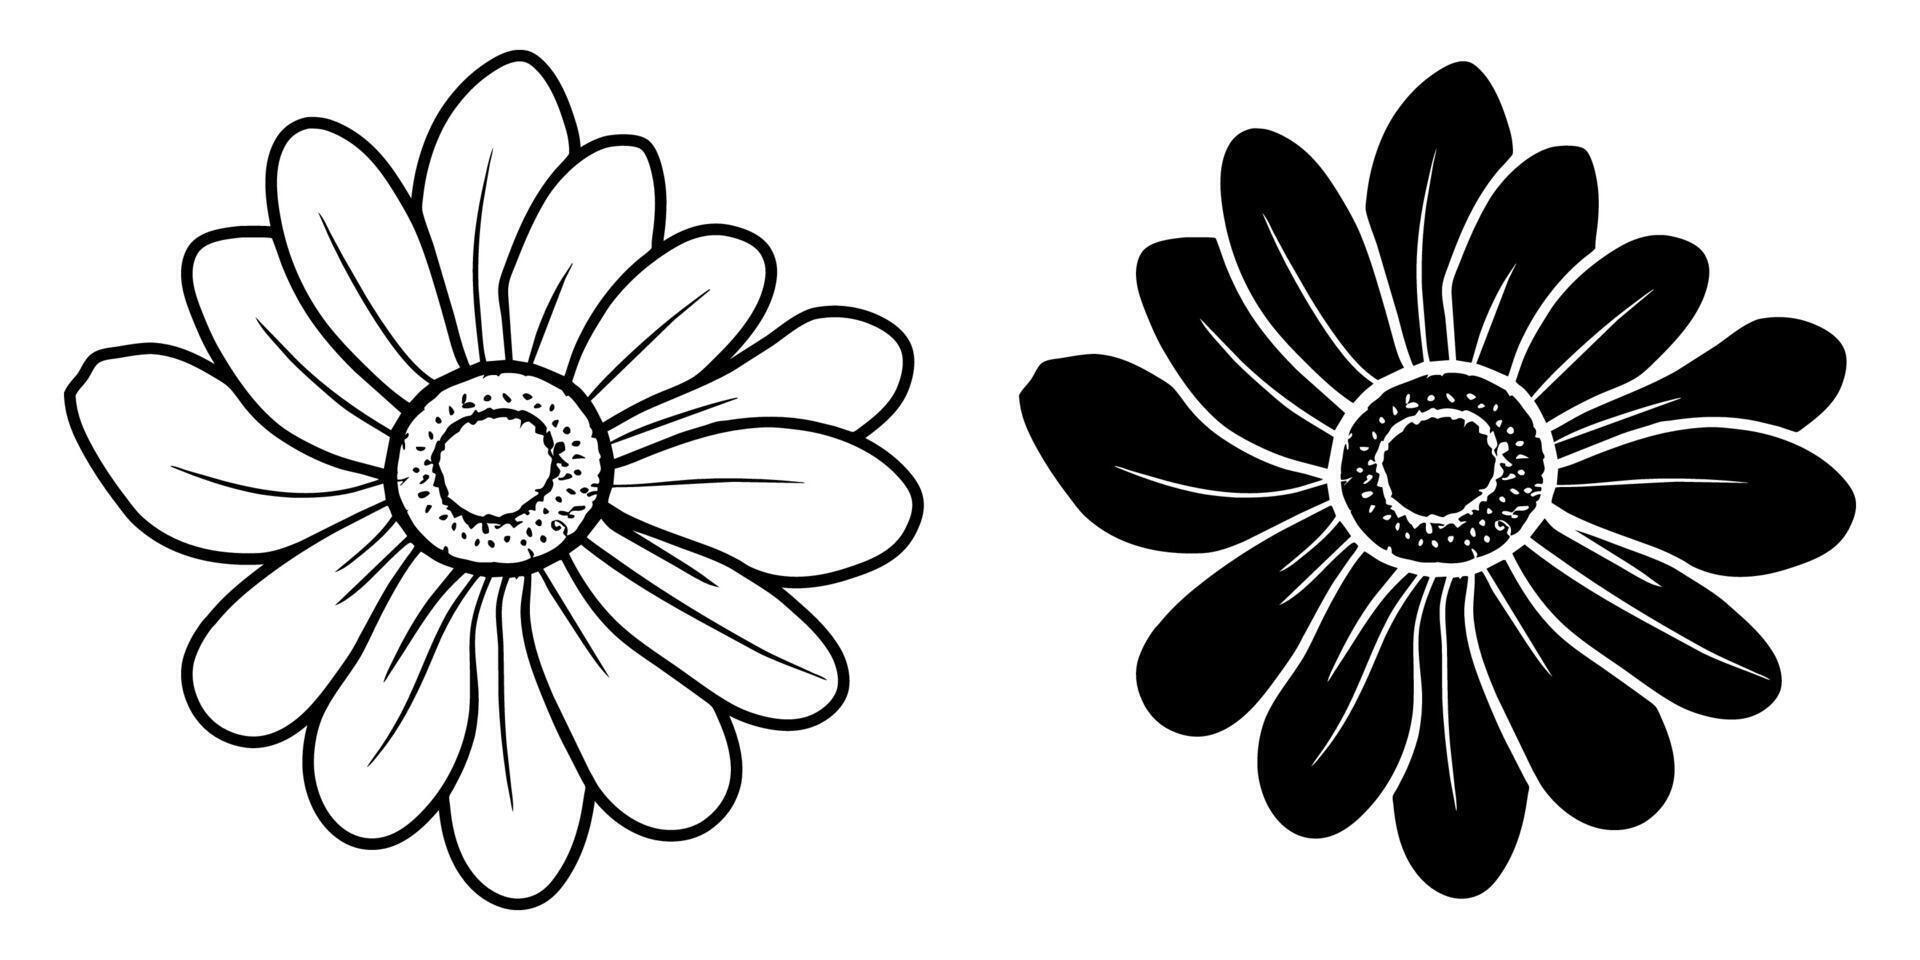 un conjunto de dos negro siluetas de flores aislado en un blanco antecedentes vector